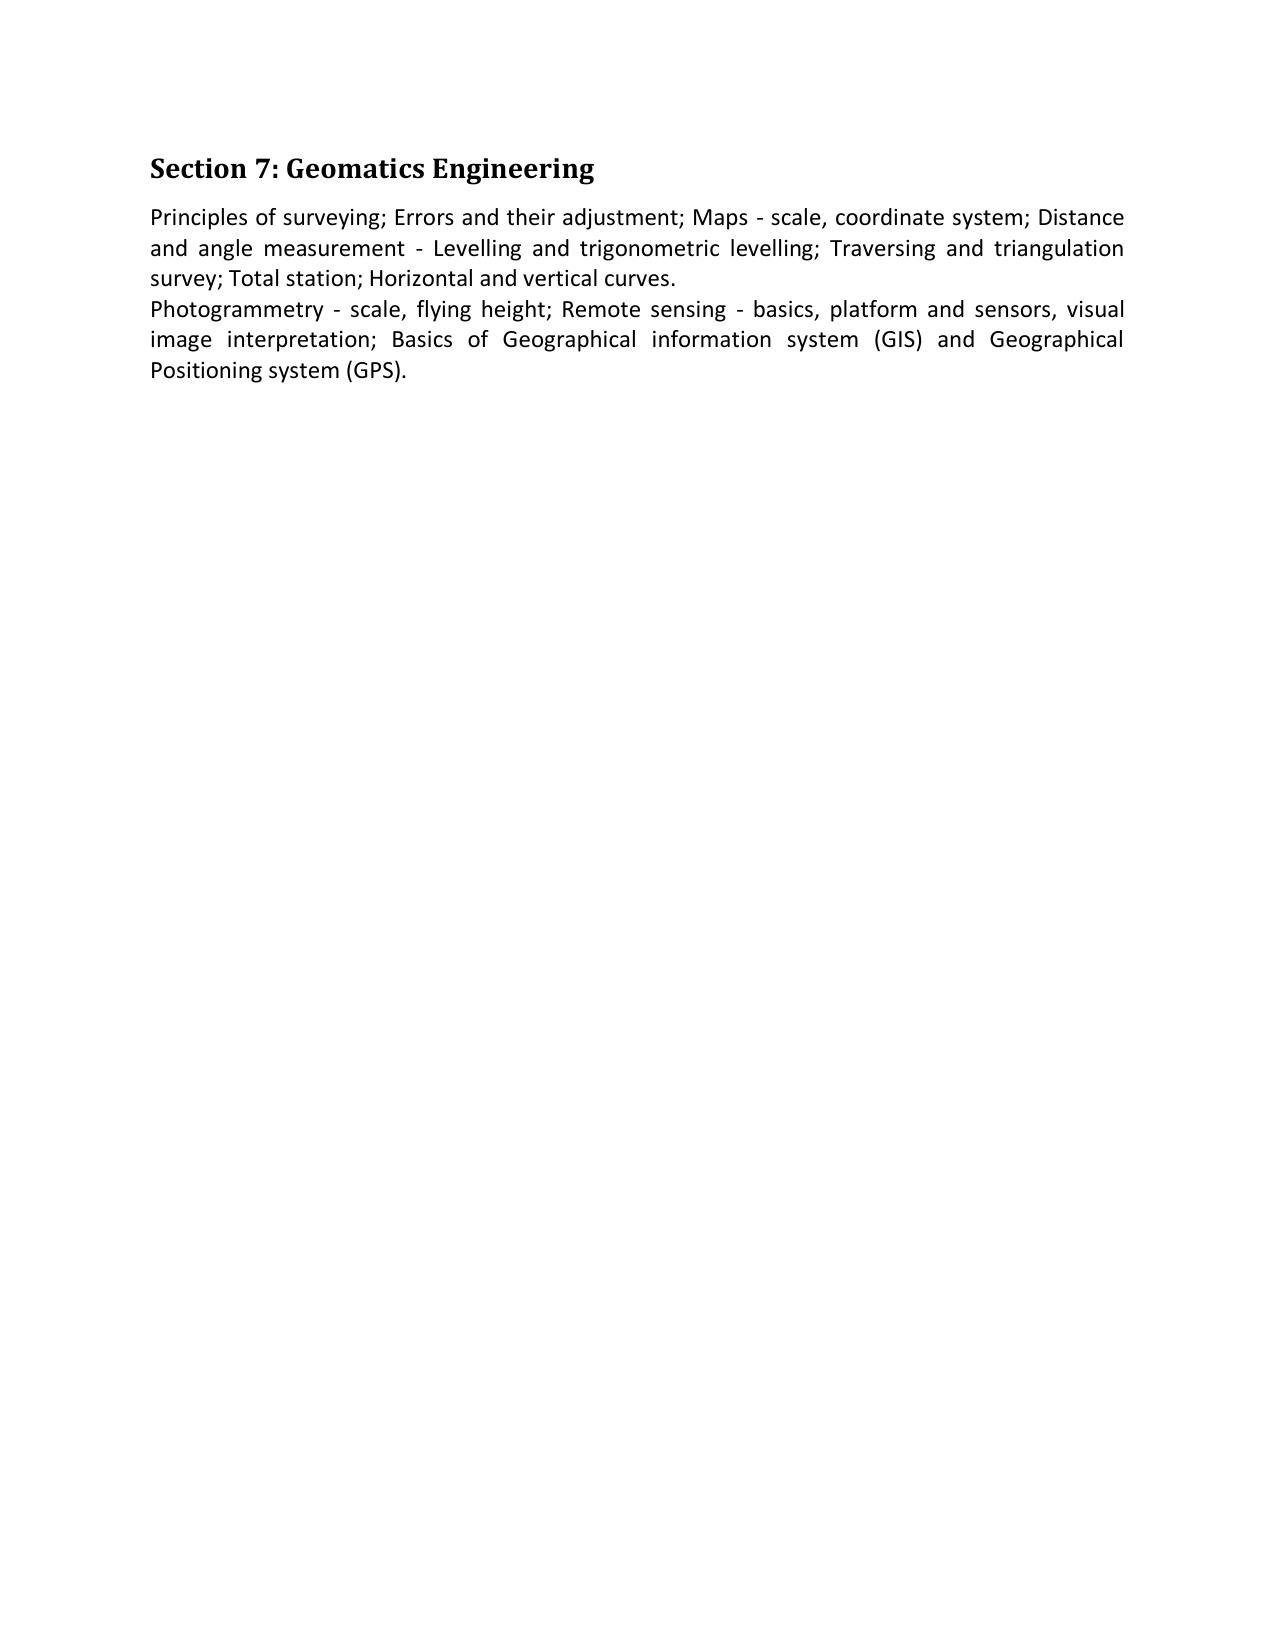 AP RCET Civil Engineering Syllabus - Page 4